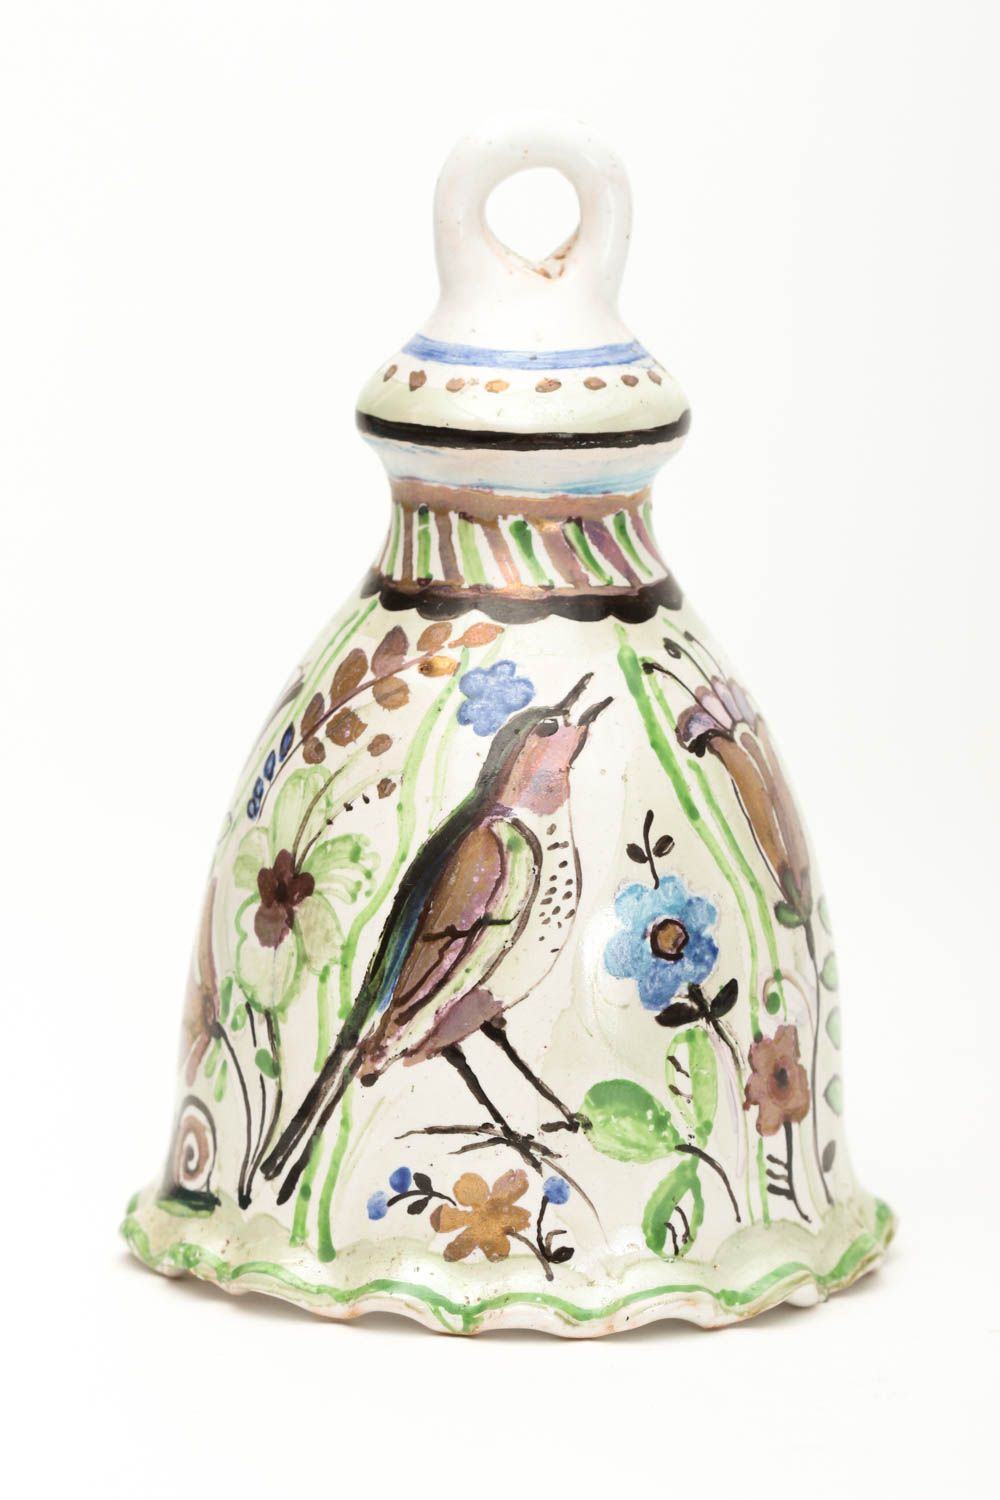 Souvenir handmade ceramic bell home design pottery works decorative use only photo 3